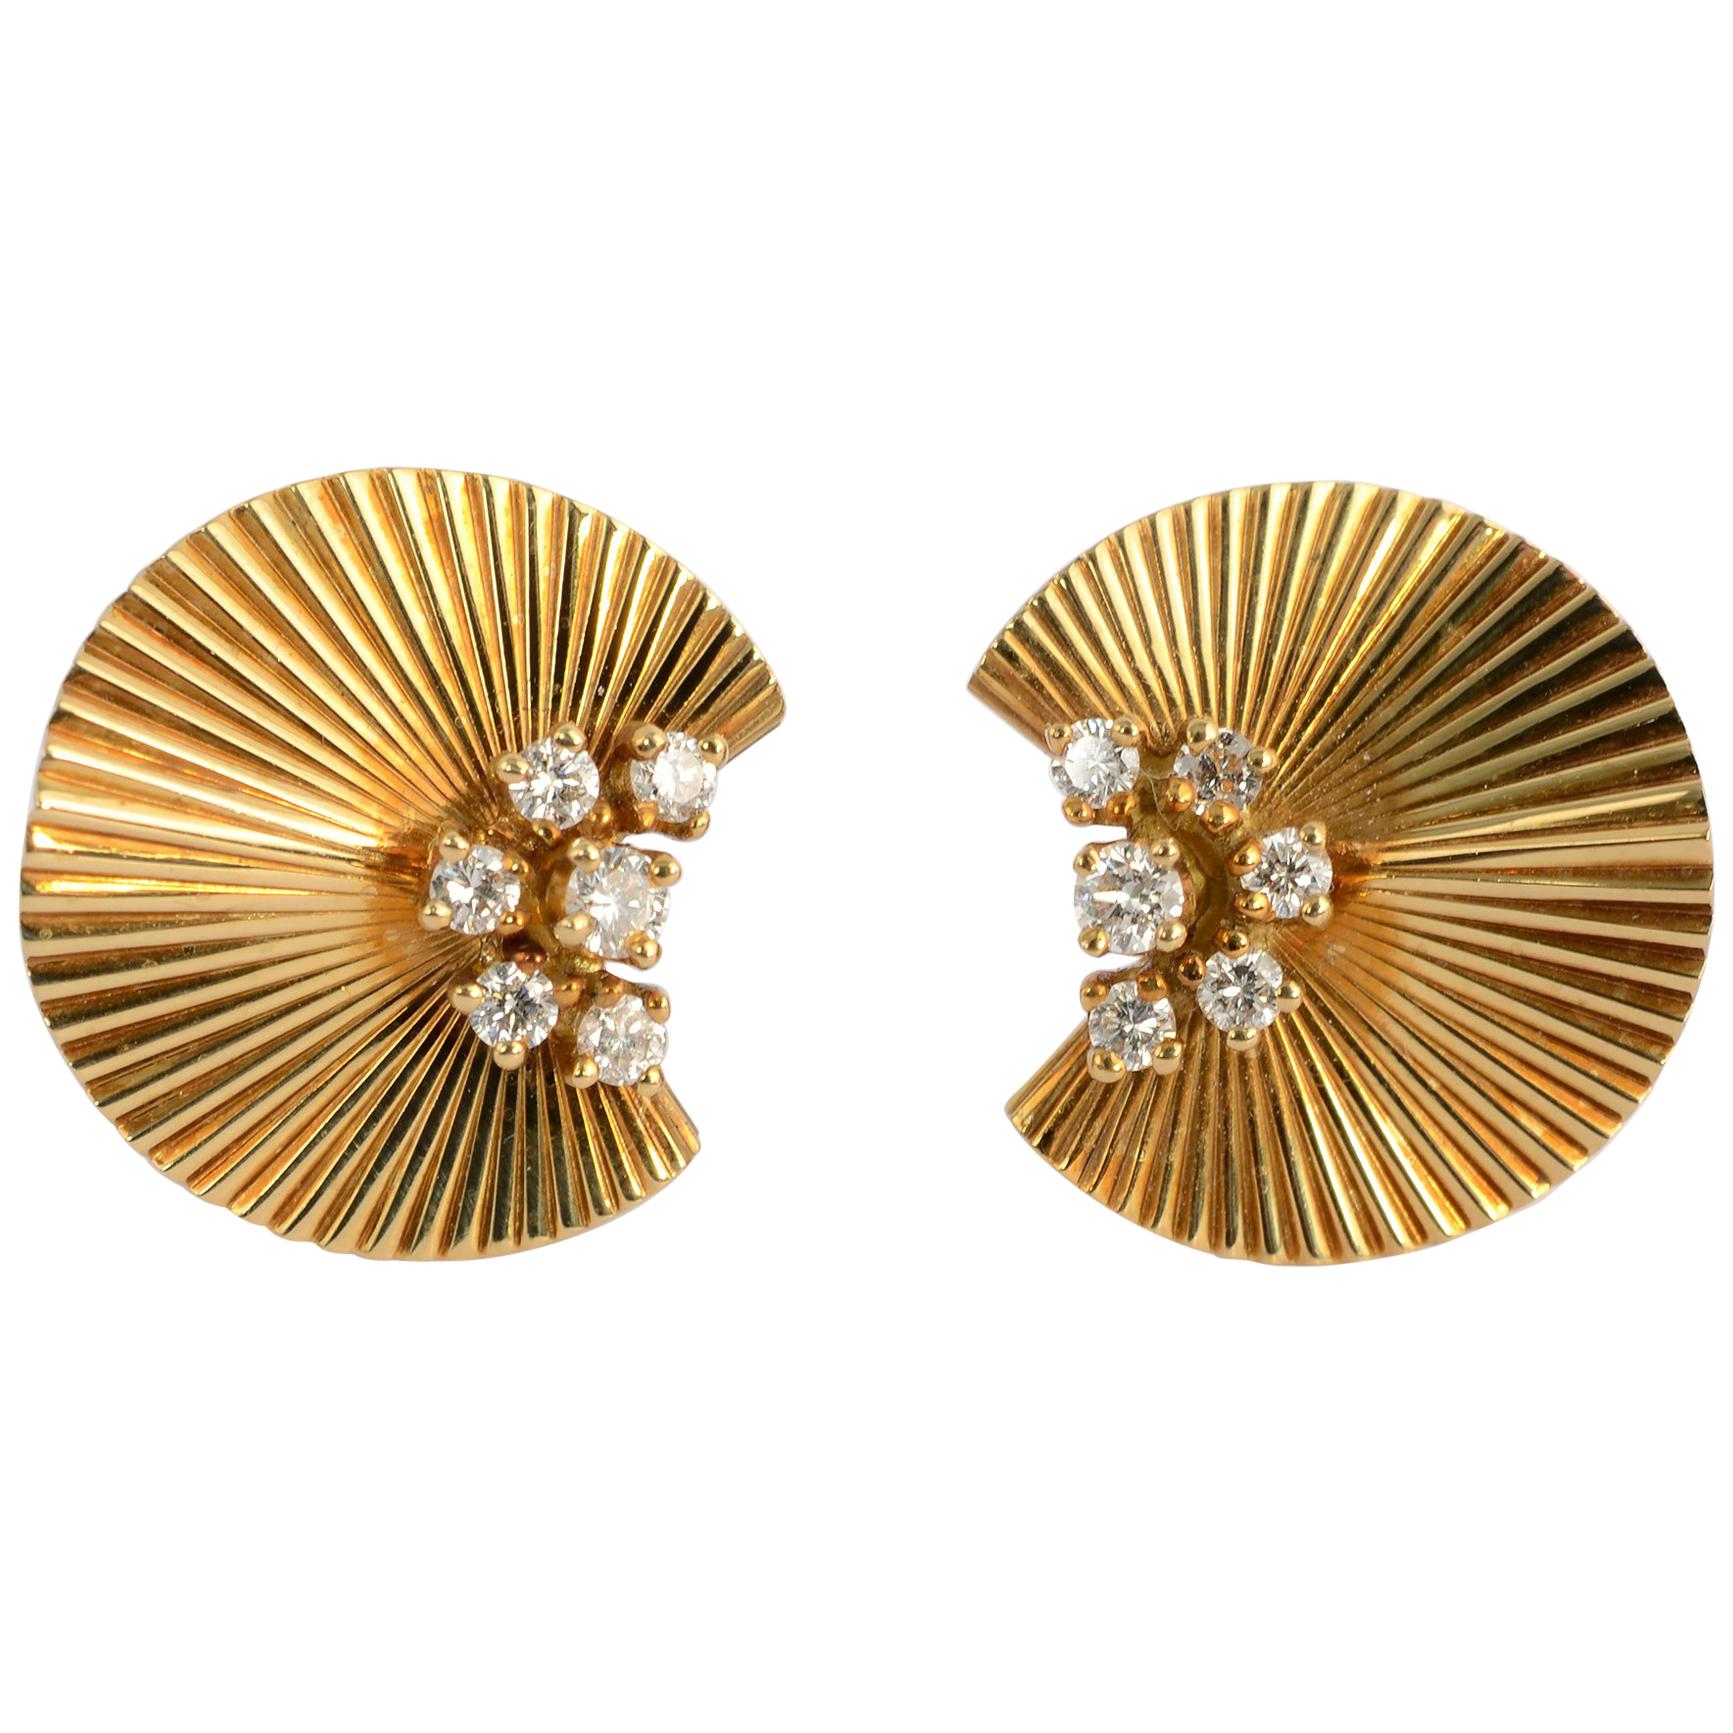 McTeigue Retro Gold Ruffled Earrings with Diamonds